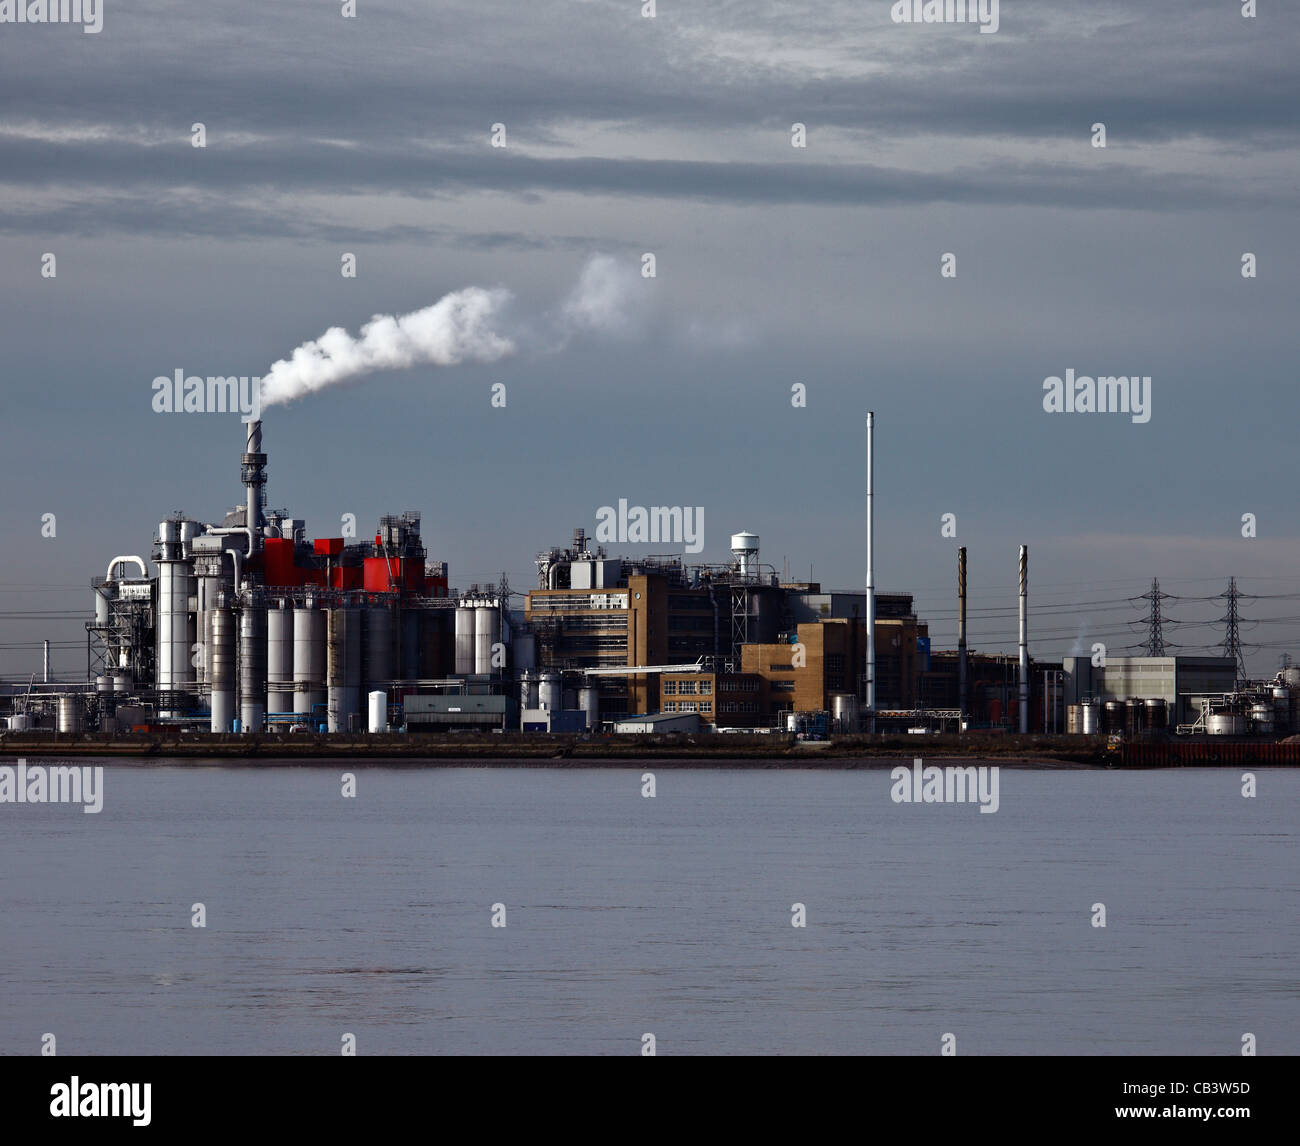 Procter und Gamble Chemiefabrik, West Thurrock, Themse, London. Stockfoto